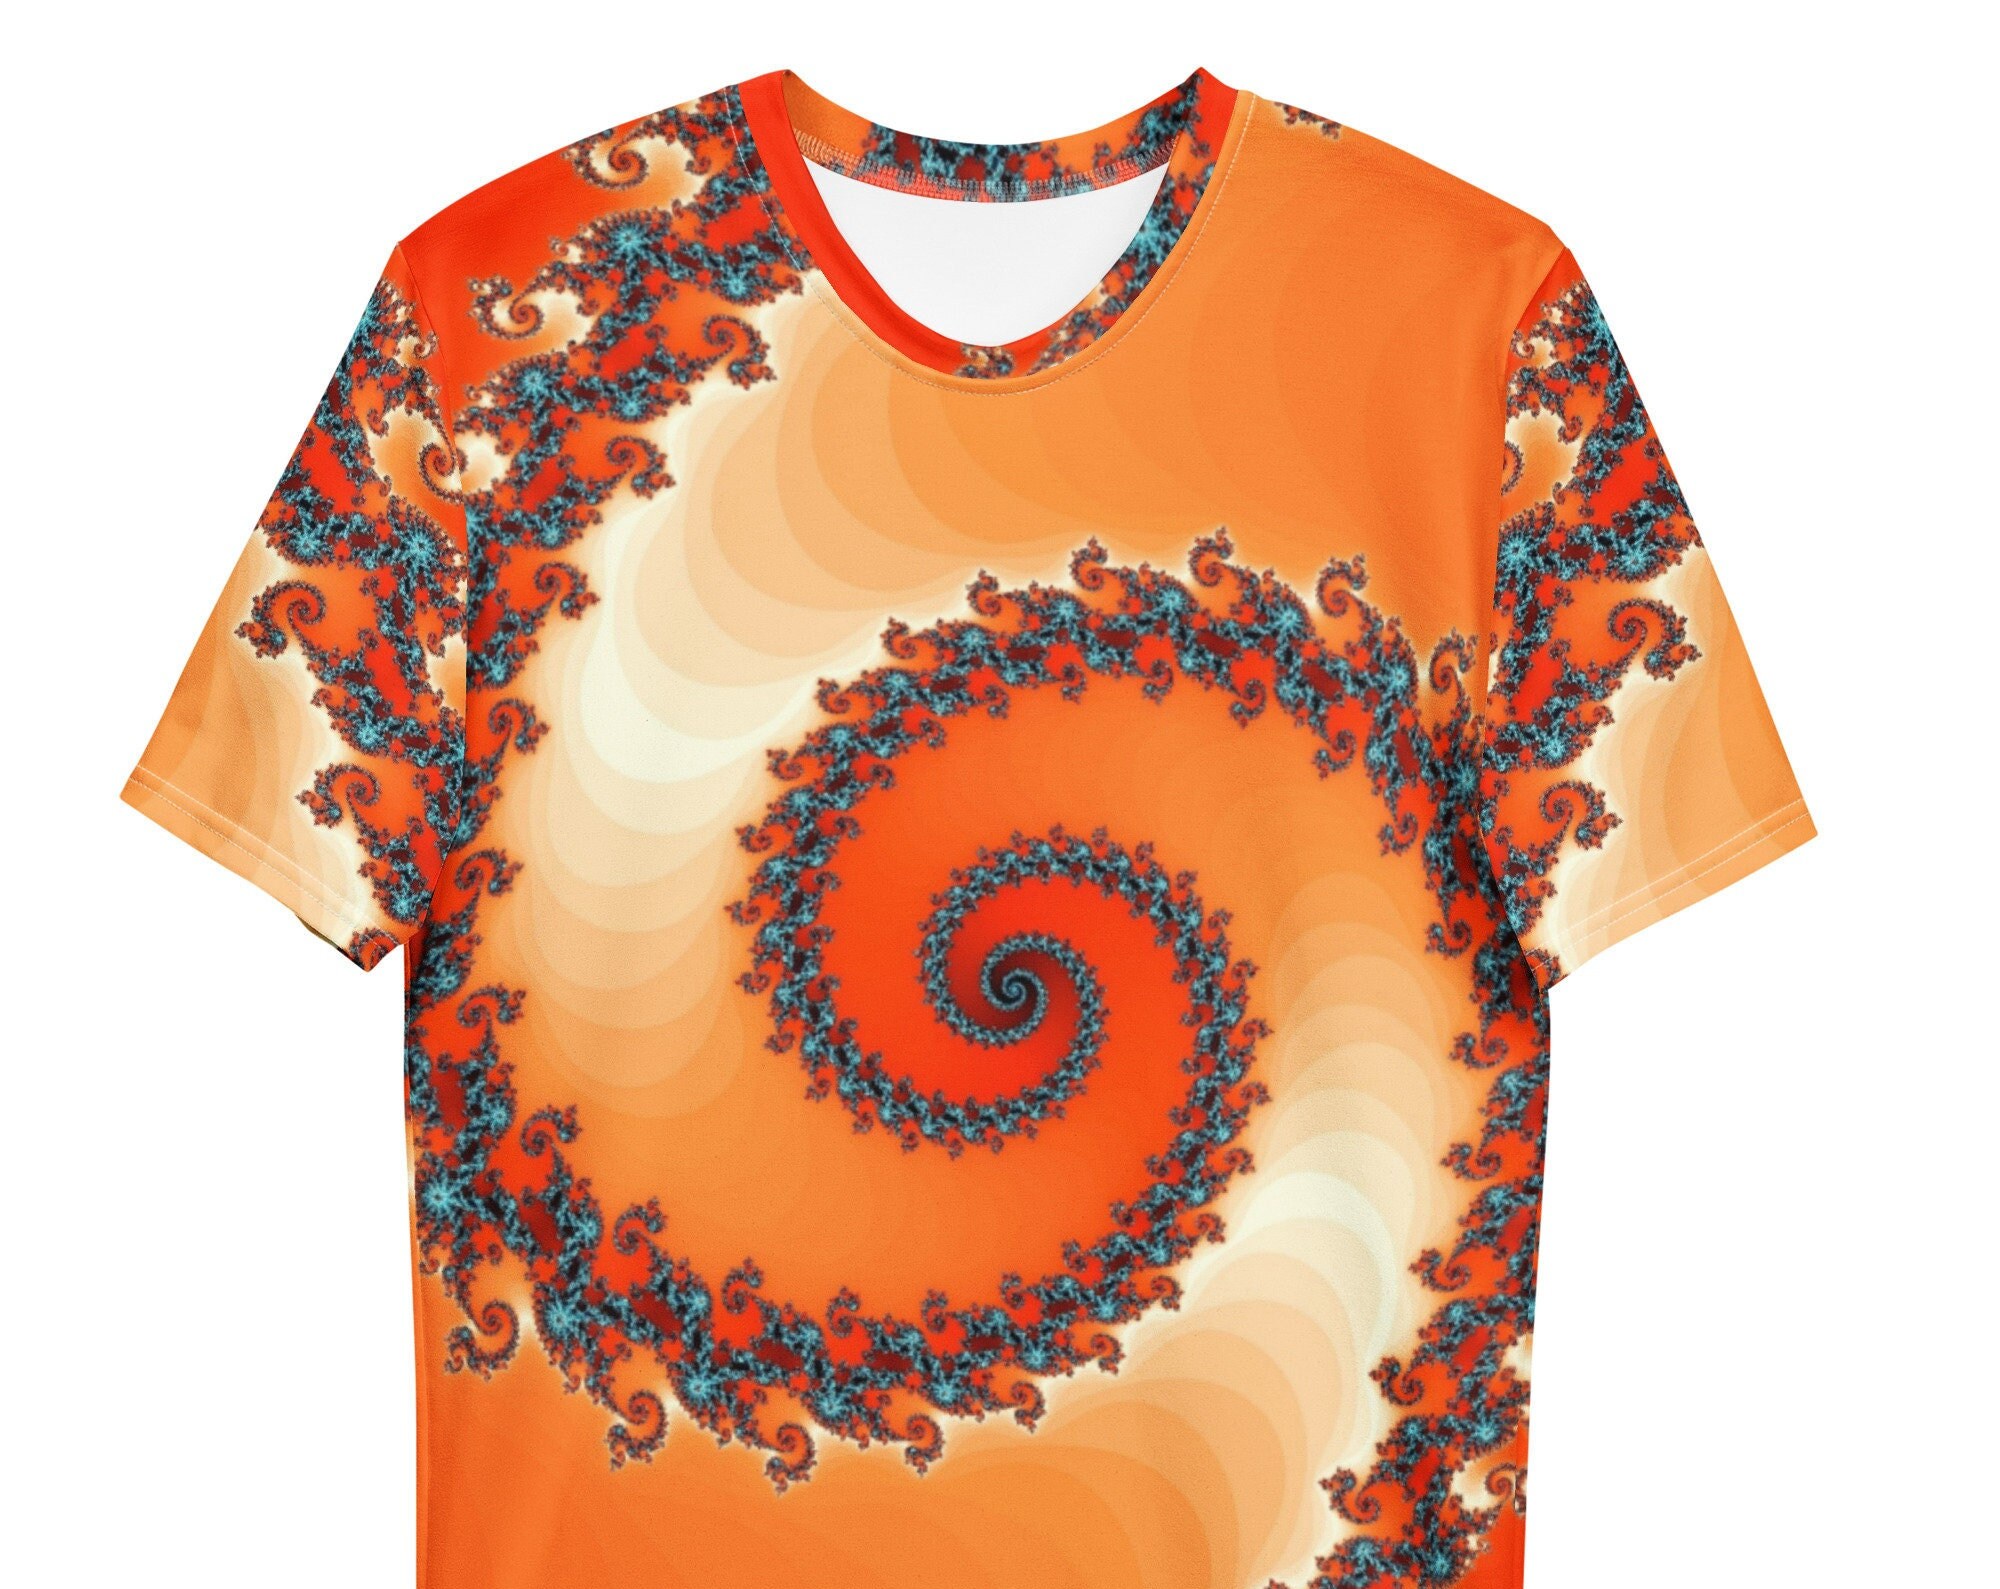 Discover 3D Shirt - Orange Spiral